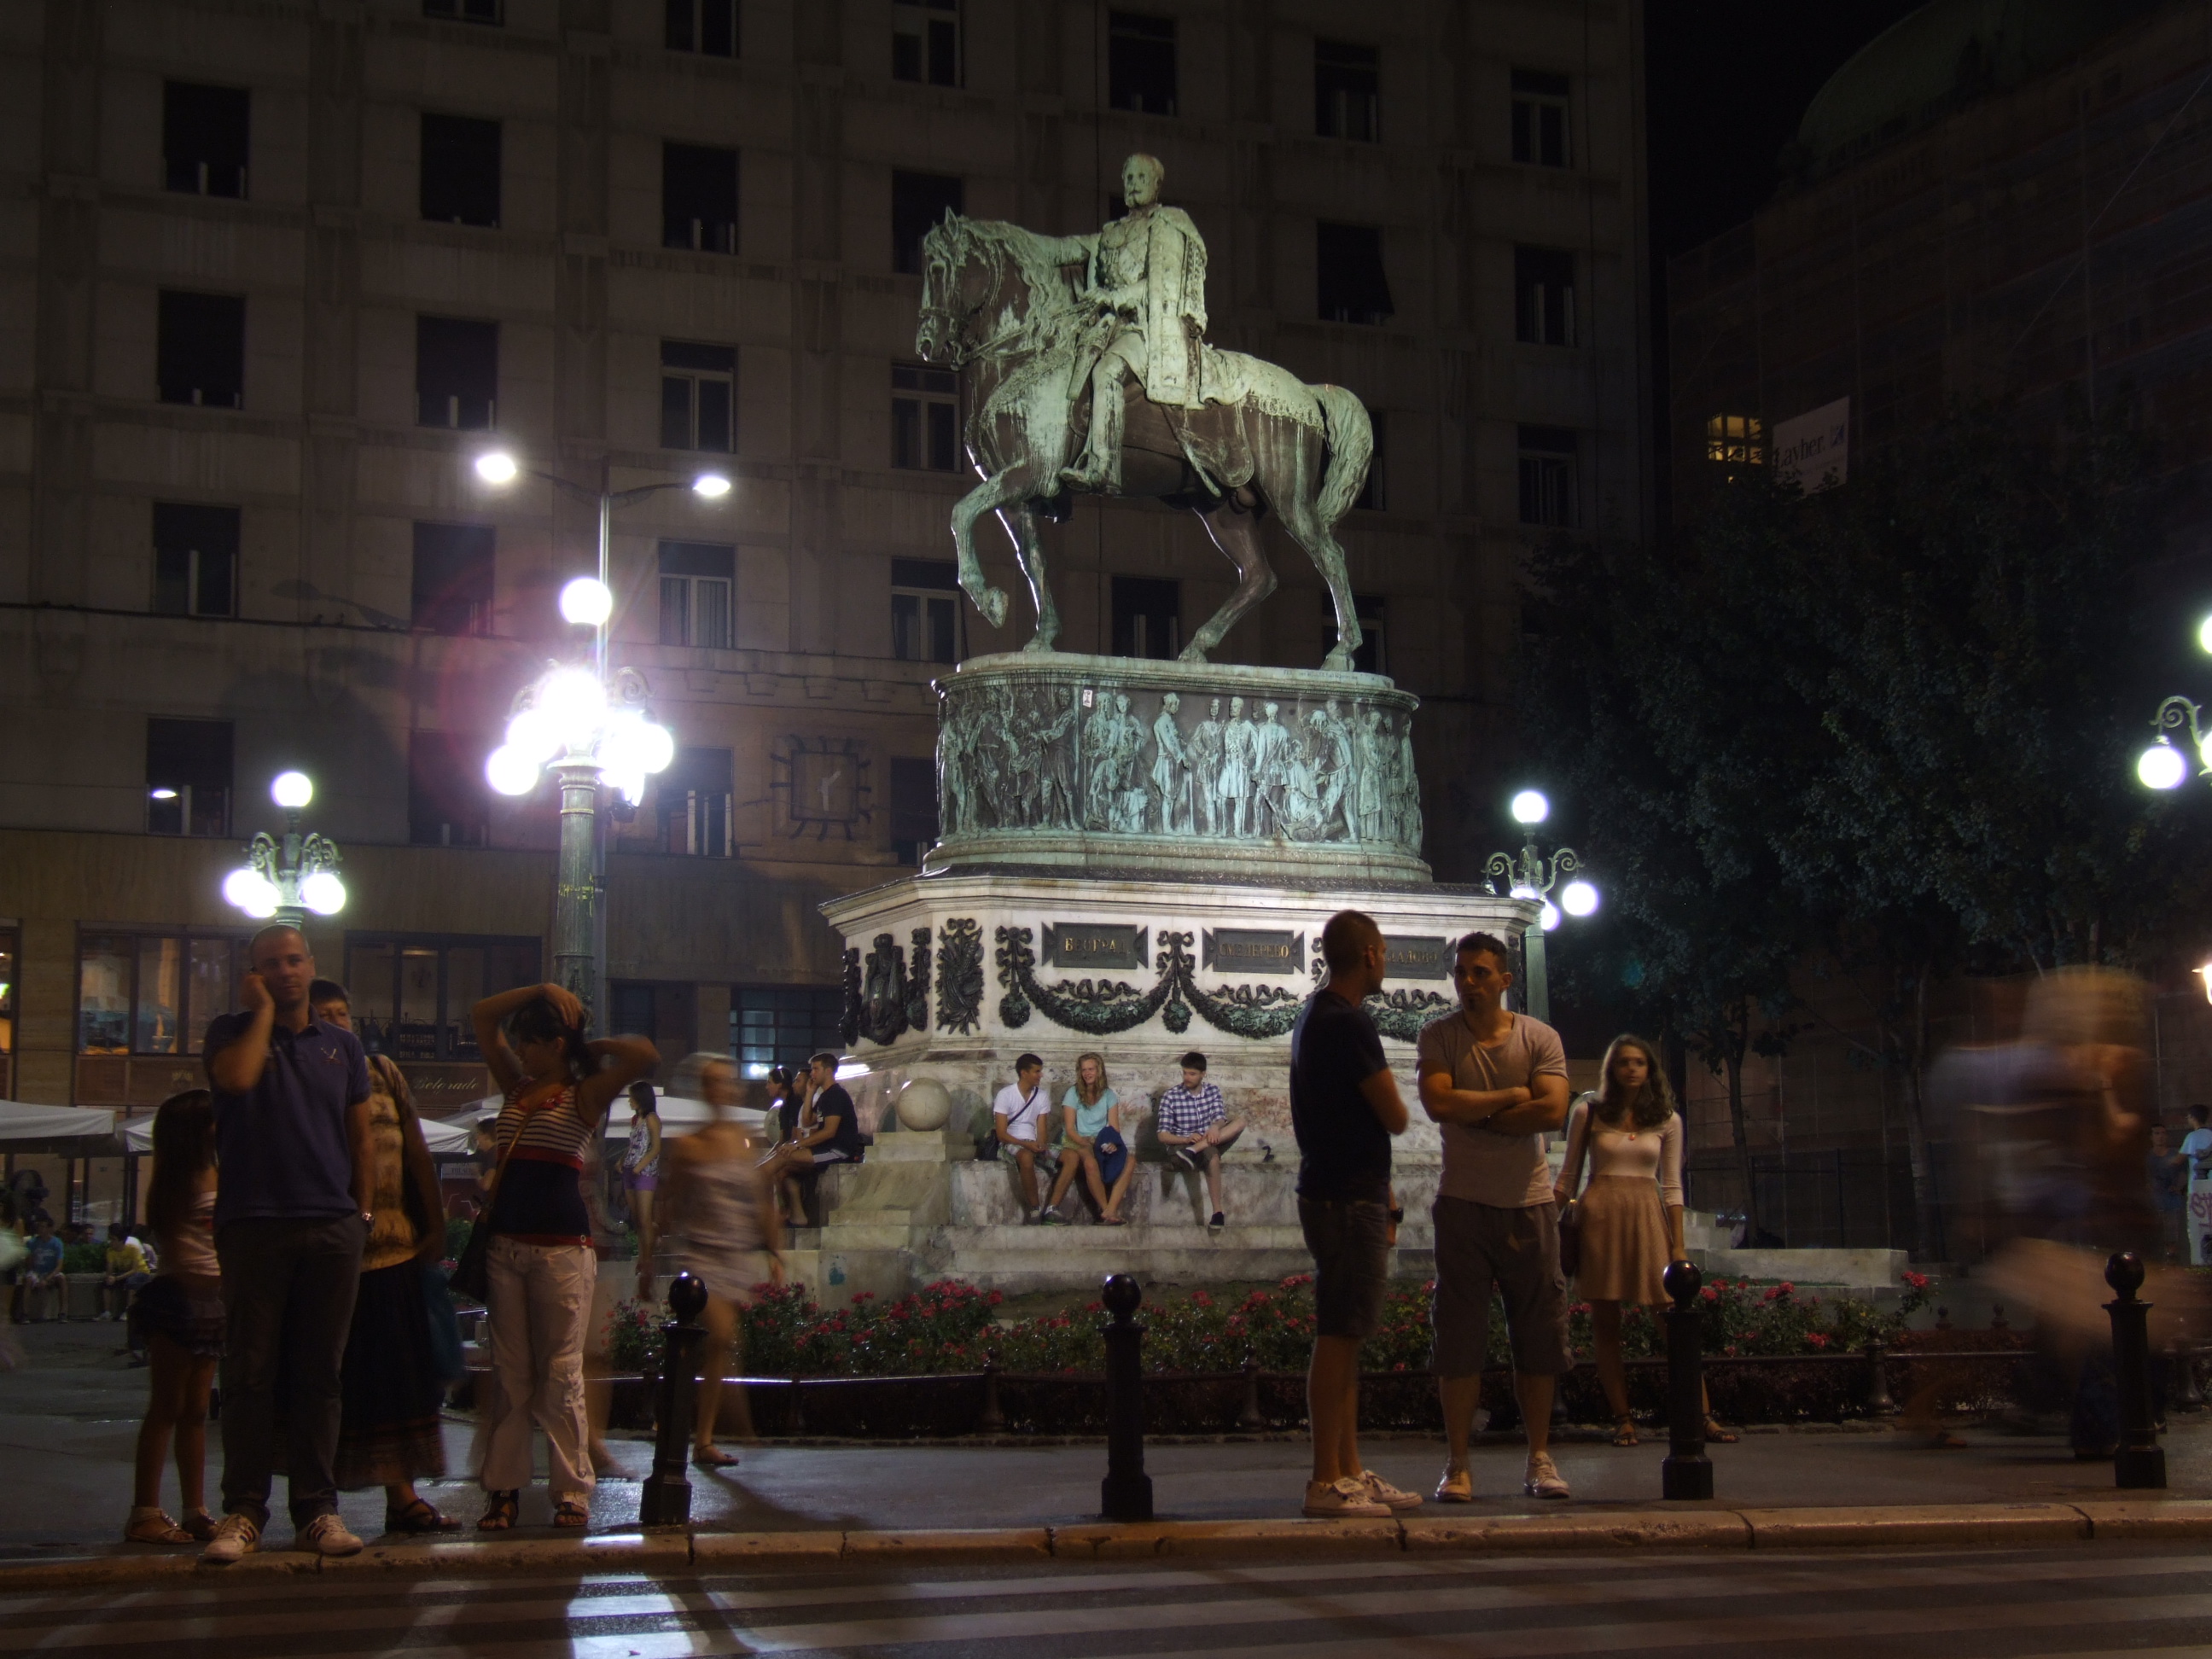 https://commons.wikimedia.org/wiki/File:Prince_Mihailo_Monument,_Belgrade_-_by_night.JPG